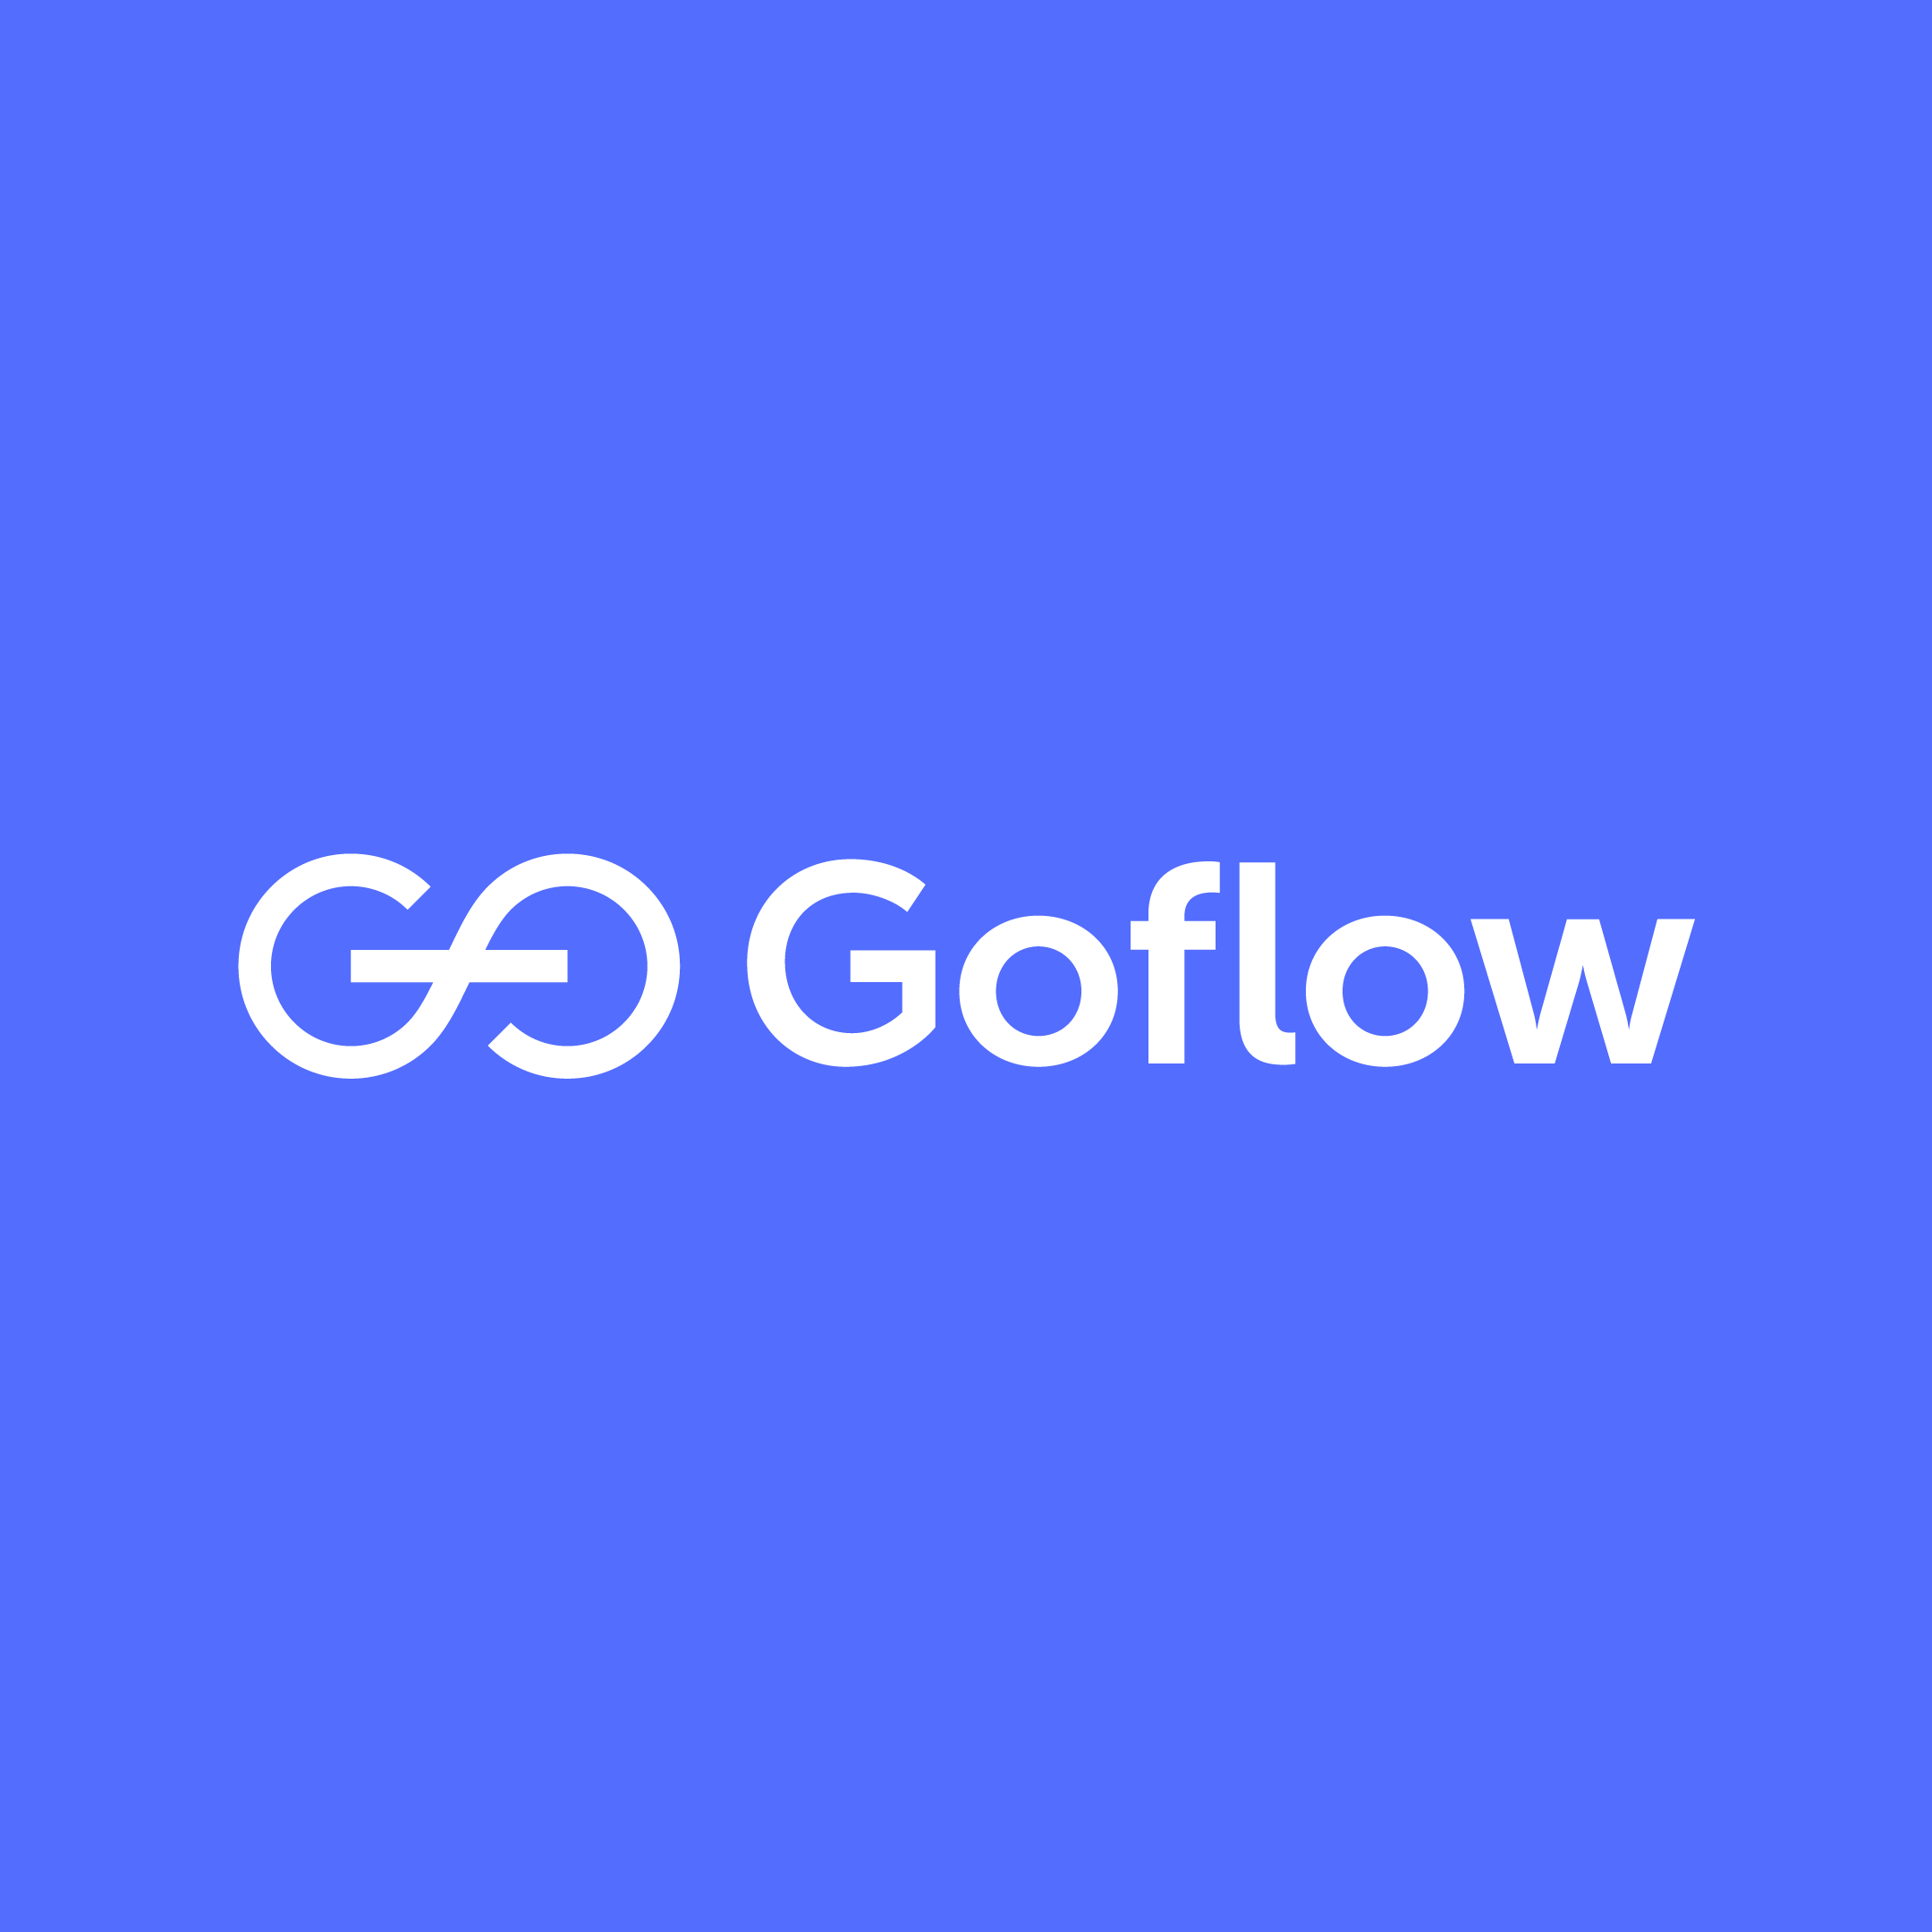 goflow-on-blue-bg